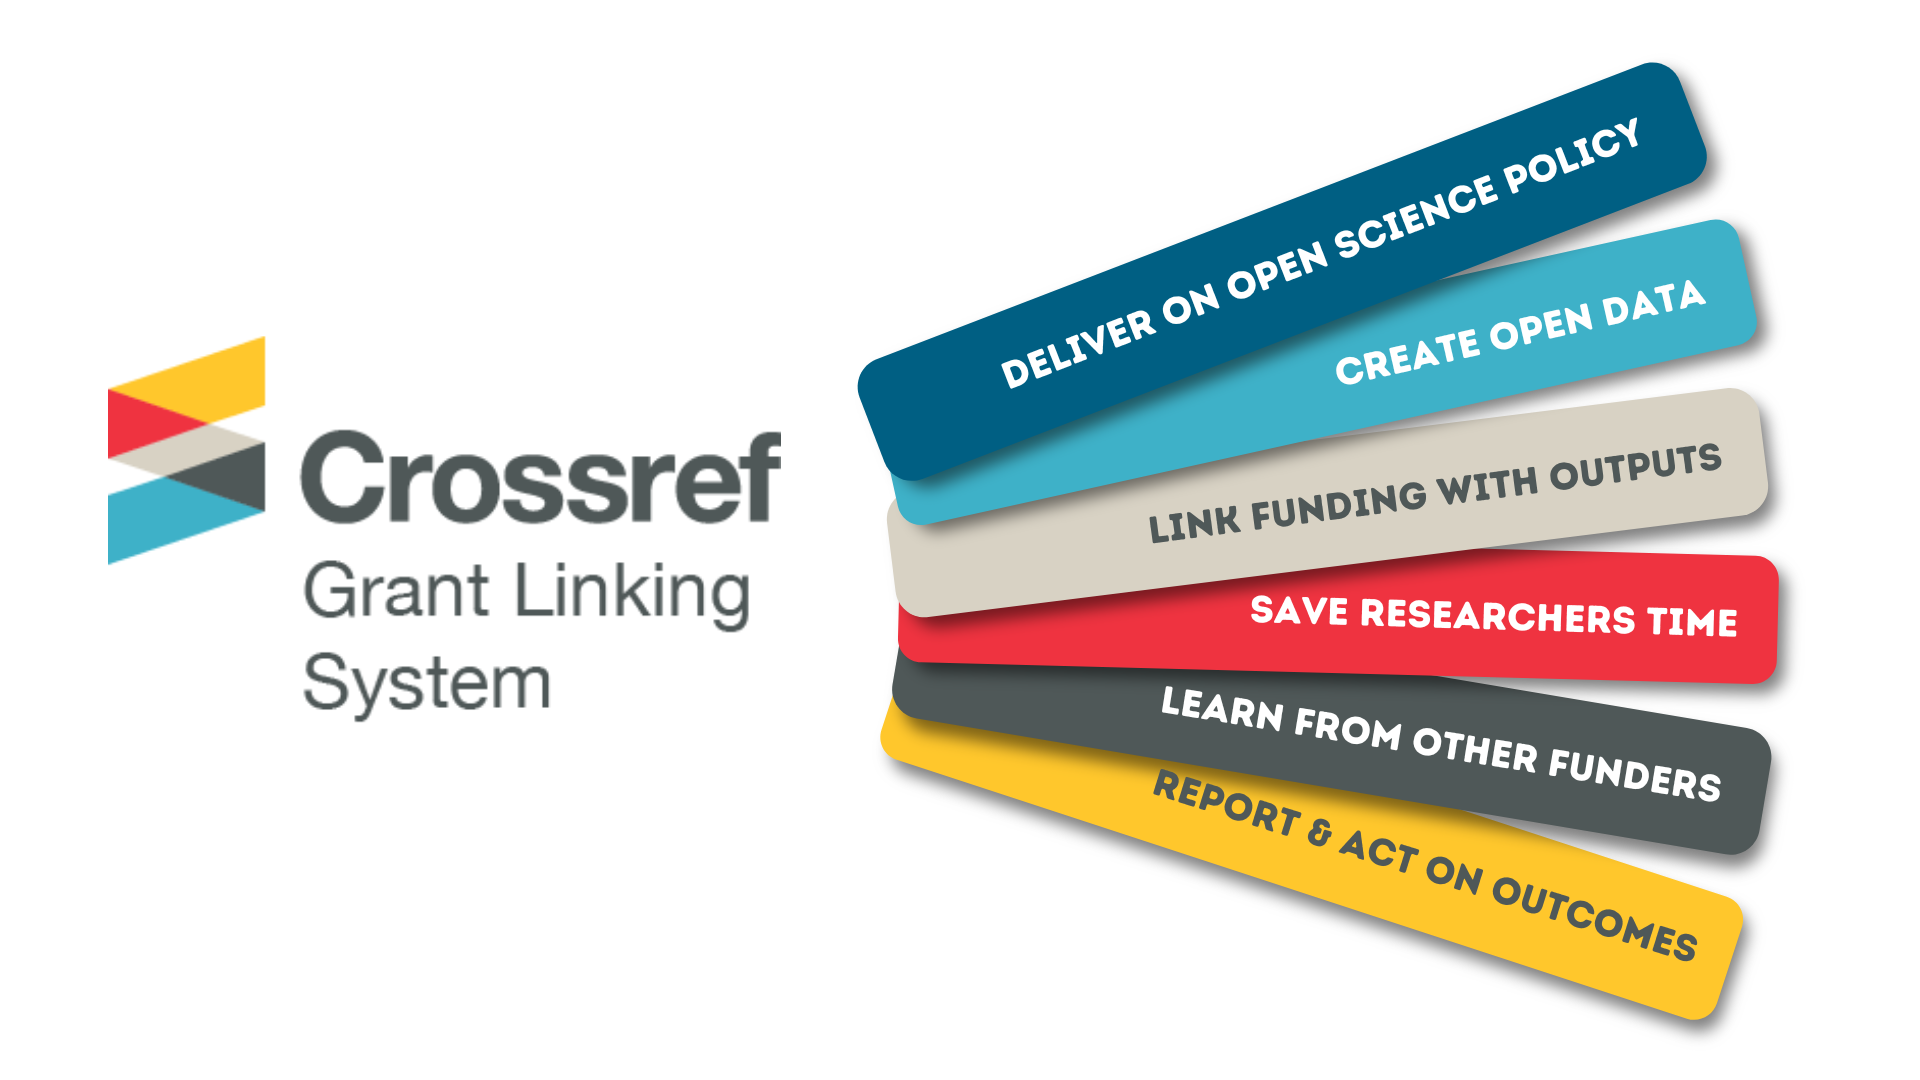 High-level benefits of the Crossref Grant Linking System (GLS)